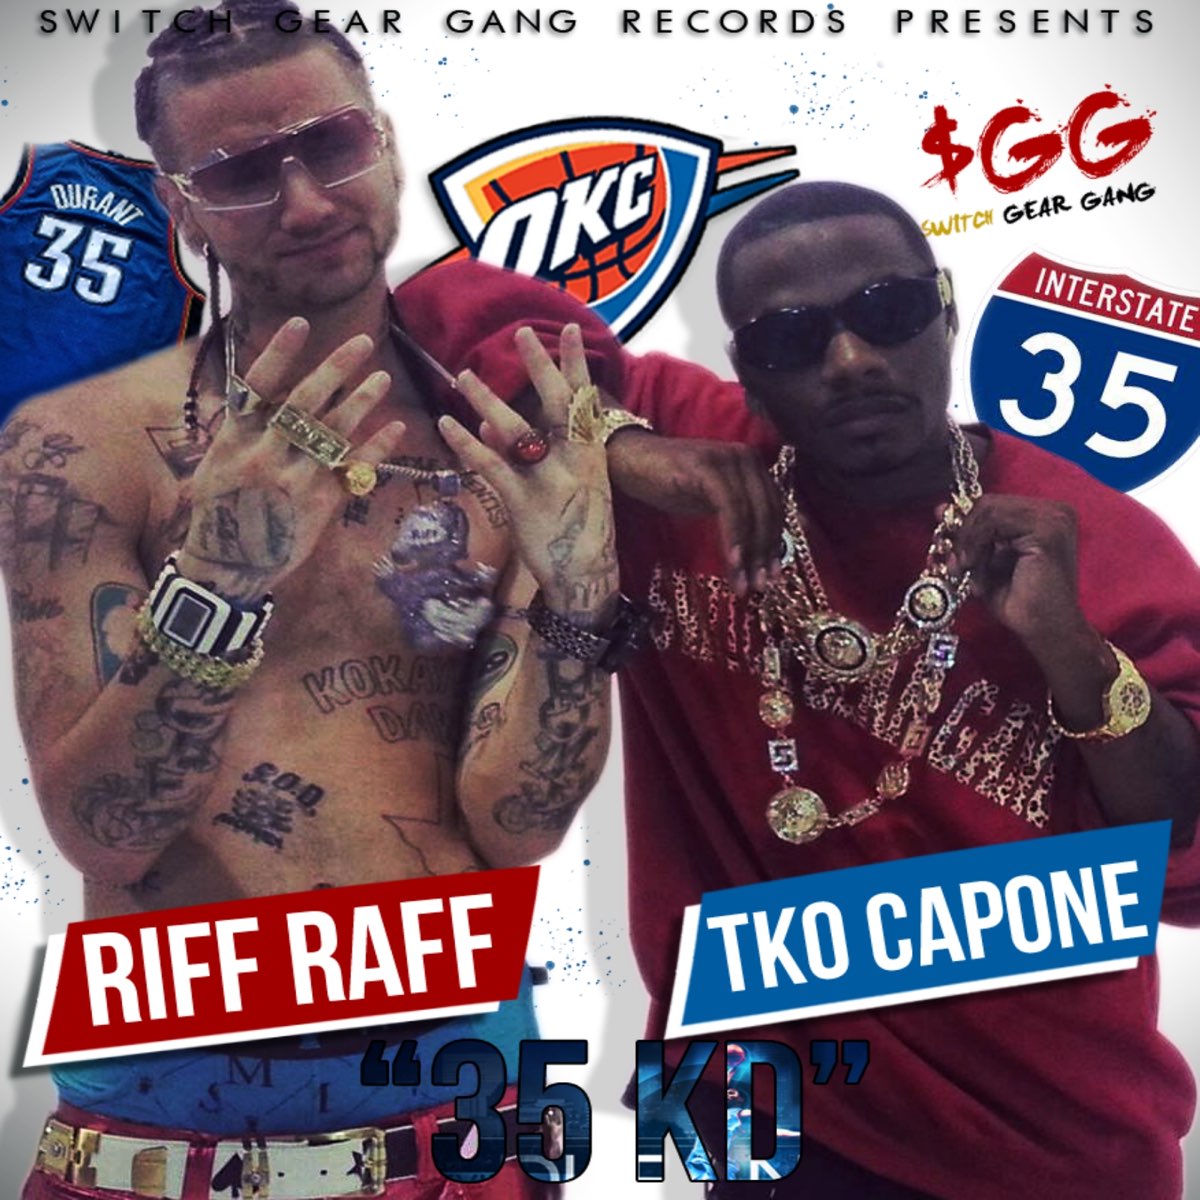 Riff Raff) - Single, Tko Capone, музыка, синглы, песни, Хип-хоп, музыка в i...